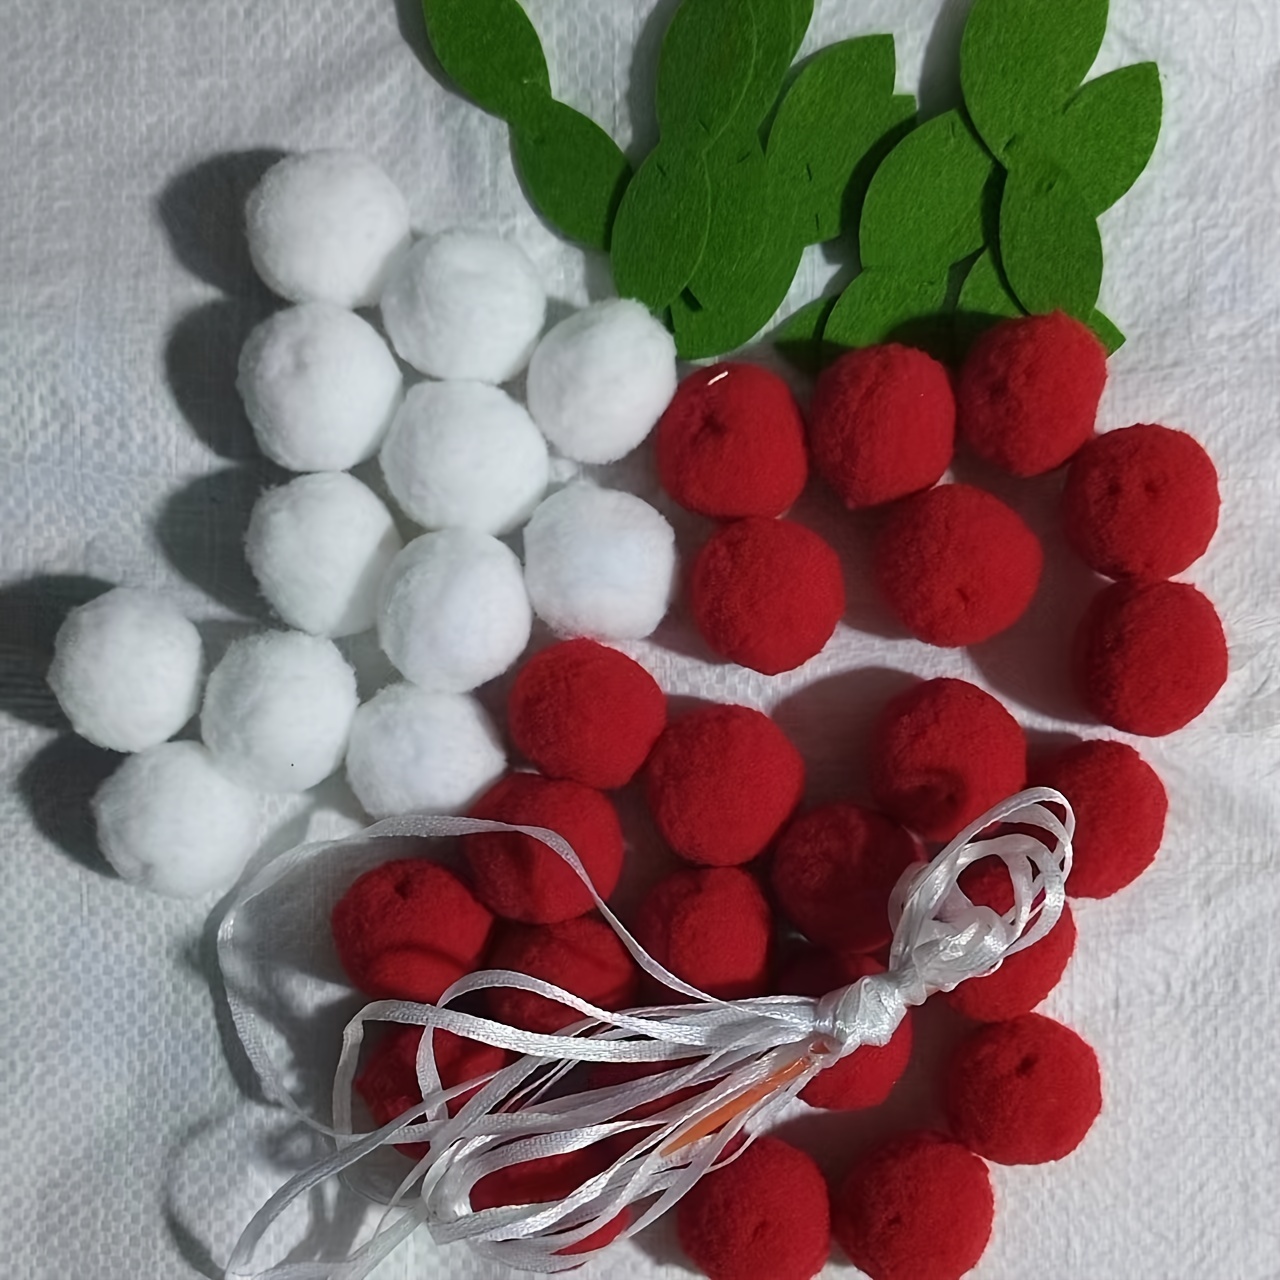 Christmas Pom Pom Garland with Red, Green and White Pom Poms 